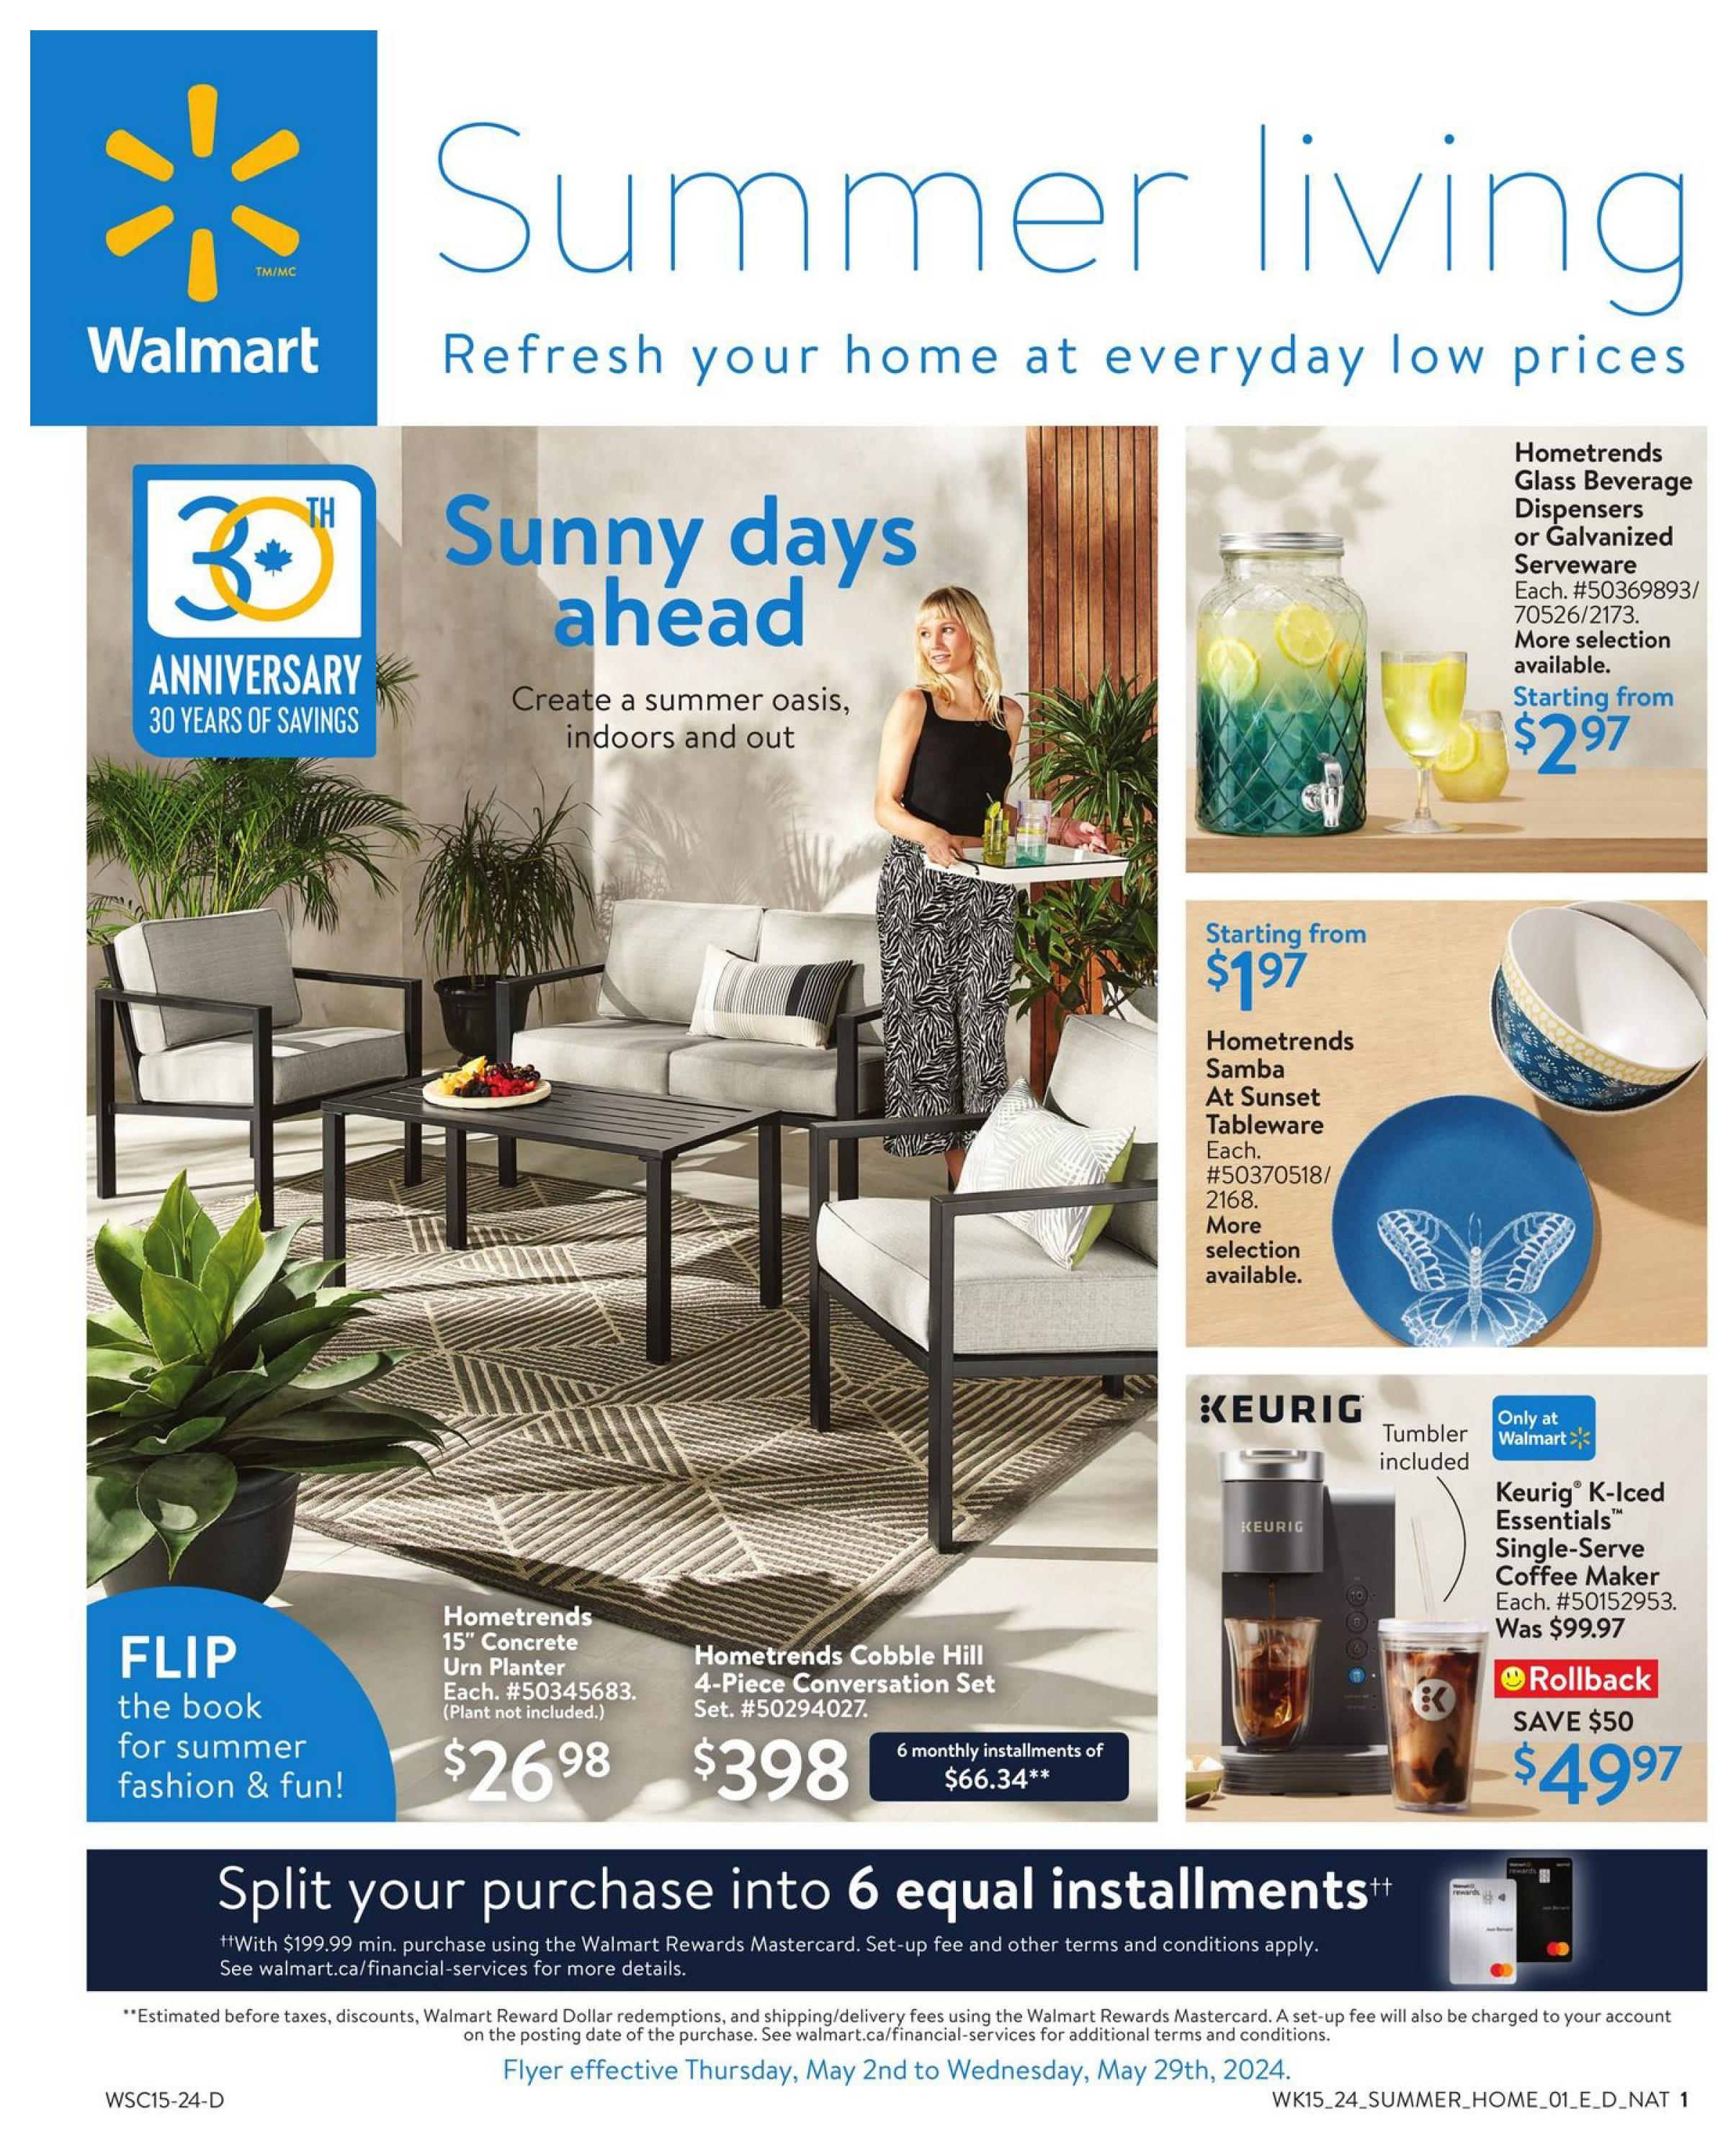 Walmart Canada - Summer Living